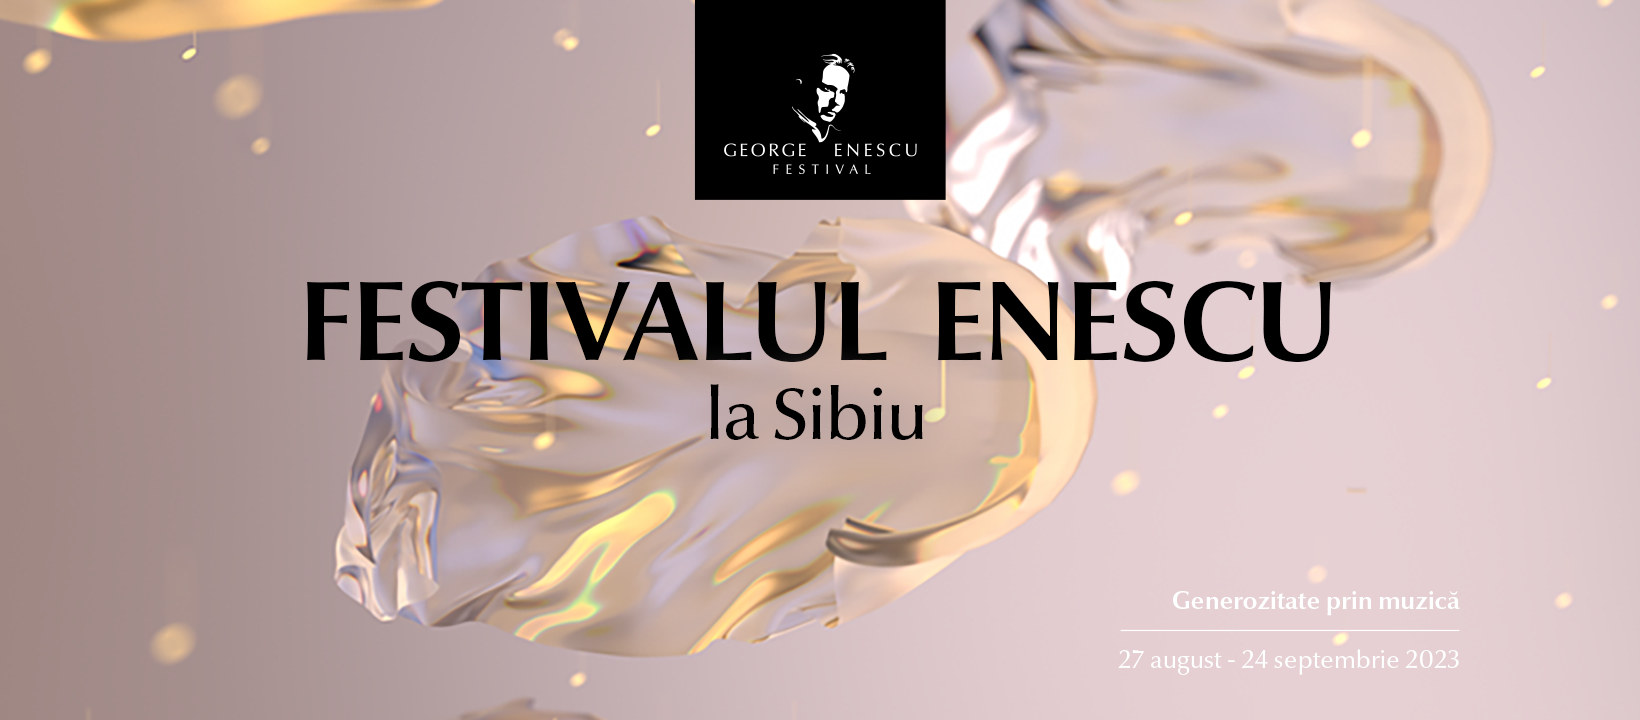 Festivalul Enescu la Sibiu